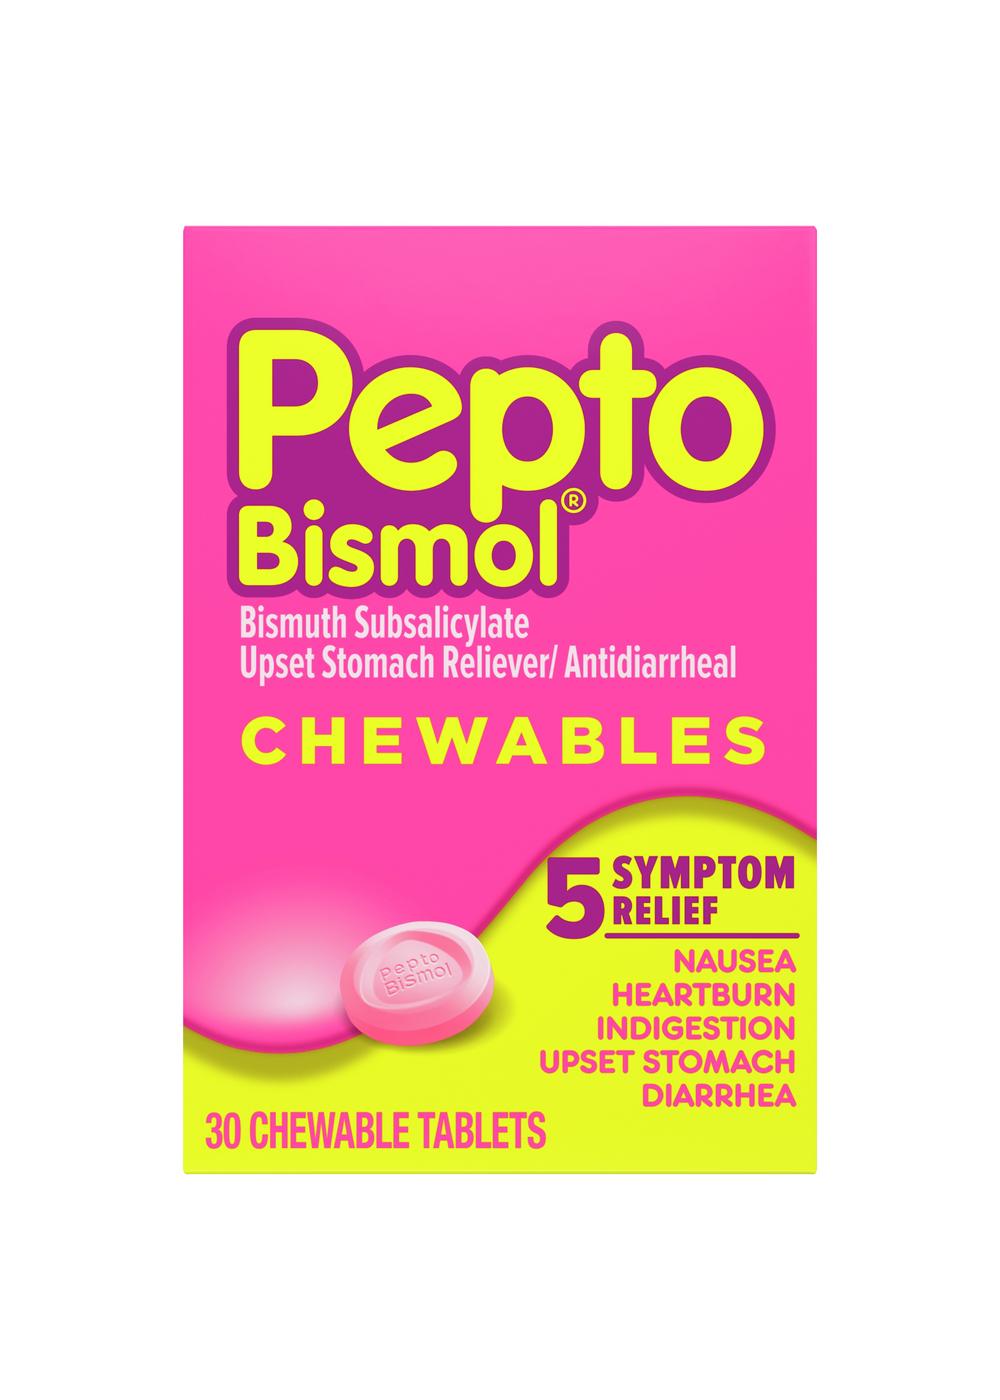 Pepto Bismol Chewable Tablets - Original; image 1 of 8